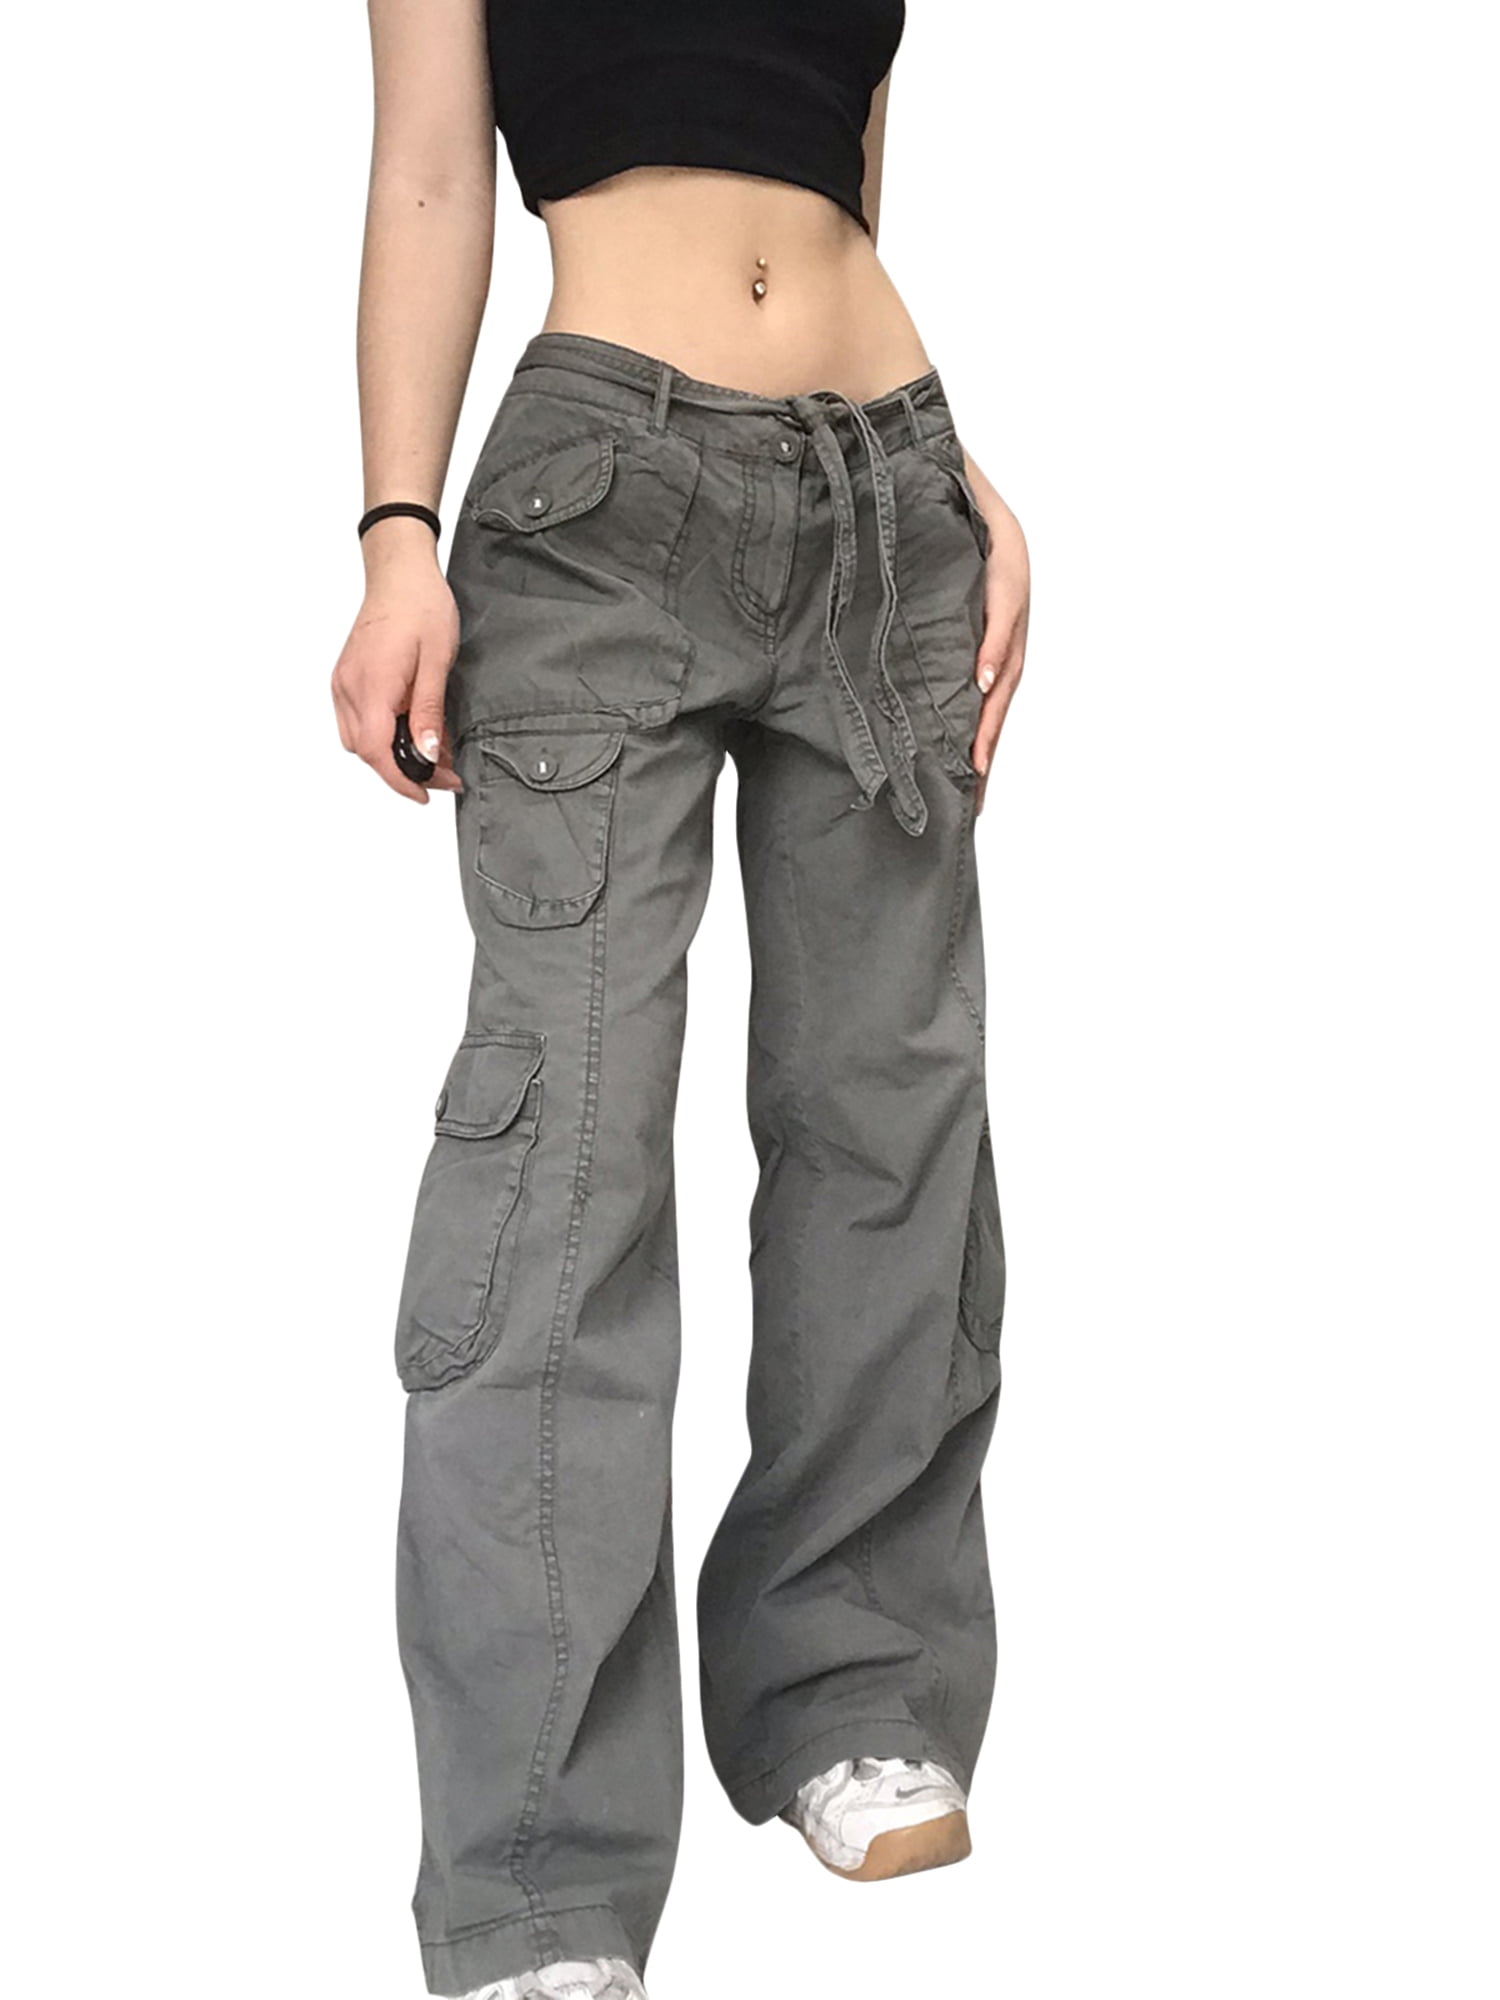 Kiapeise Woman Grunge Streetwear Cargo Pants Low Waist Baggy Jeans Vintage  90s Hippie Wide Leg Denim Trousers